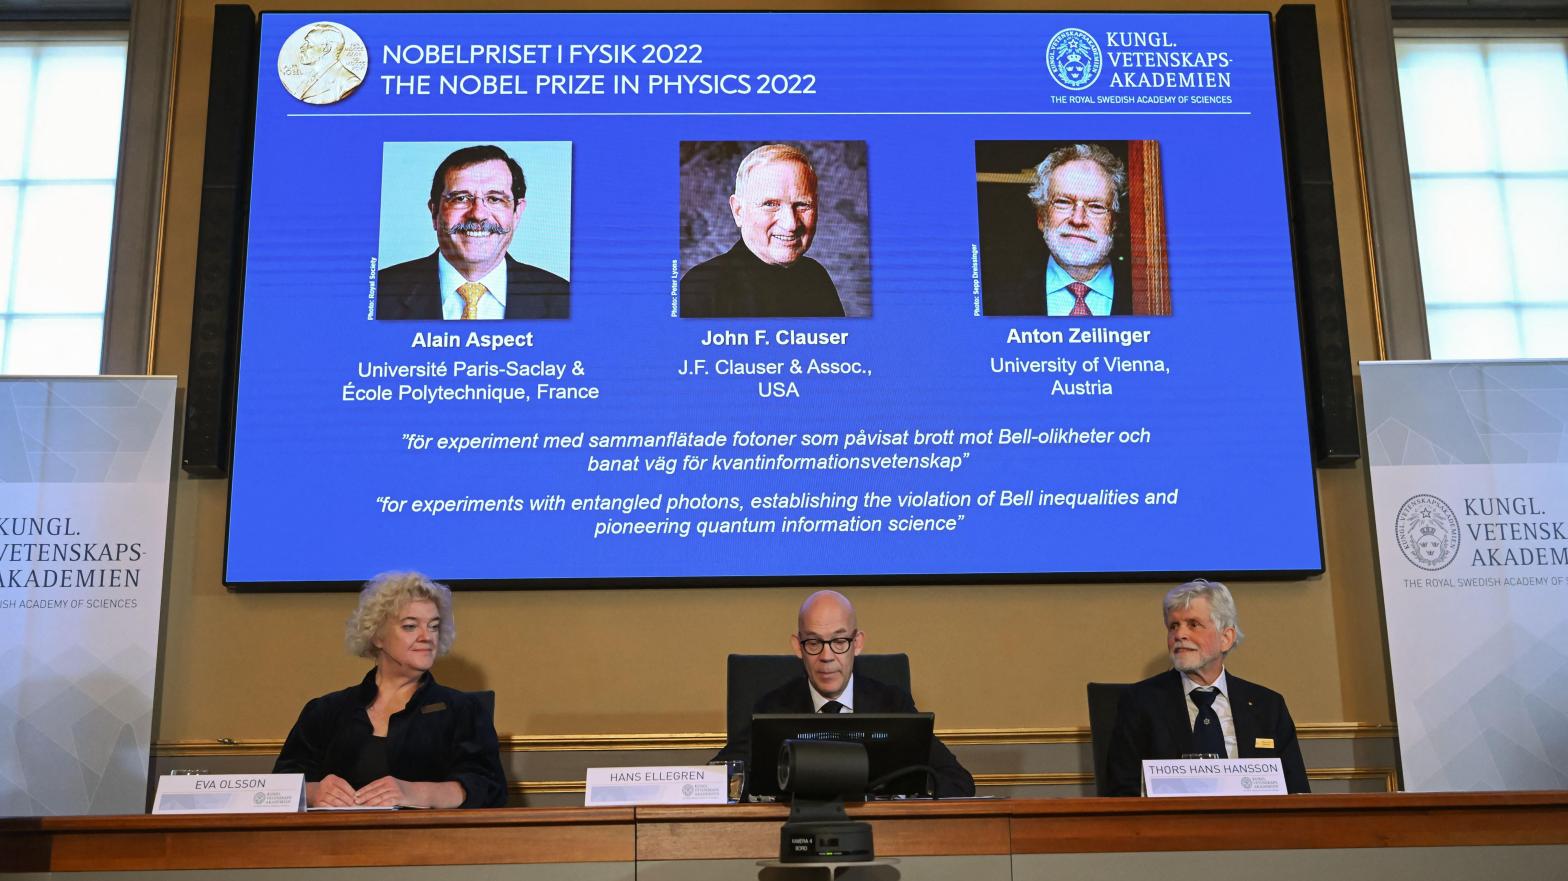 Nobel Committee for Physics members Eva Olsson, Hans Ellegren, and Thors Hans Hansson announce the Nobel Prize in Physics 2022 winners.  (Image: Jonathan Nackstrand, Getty Images)